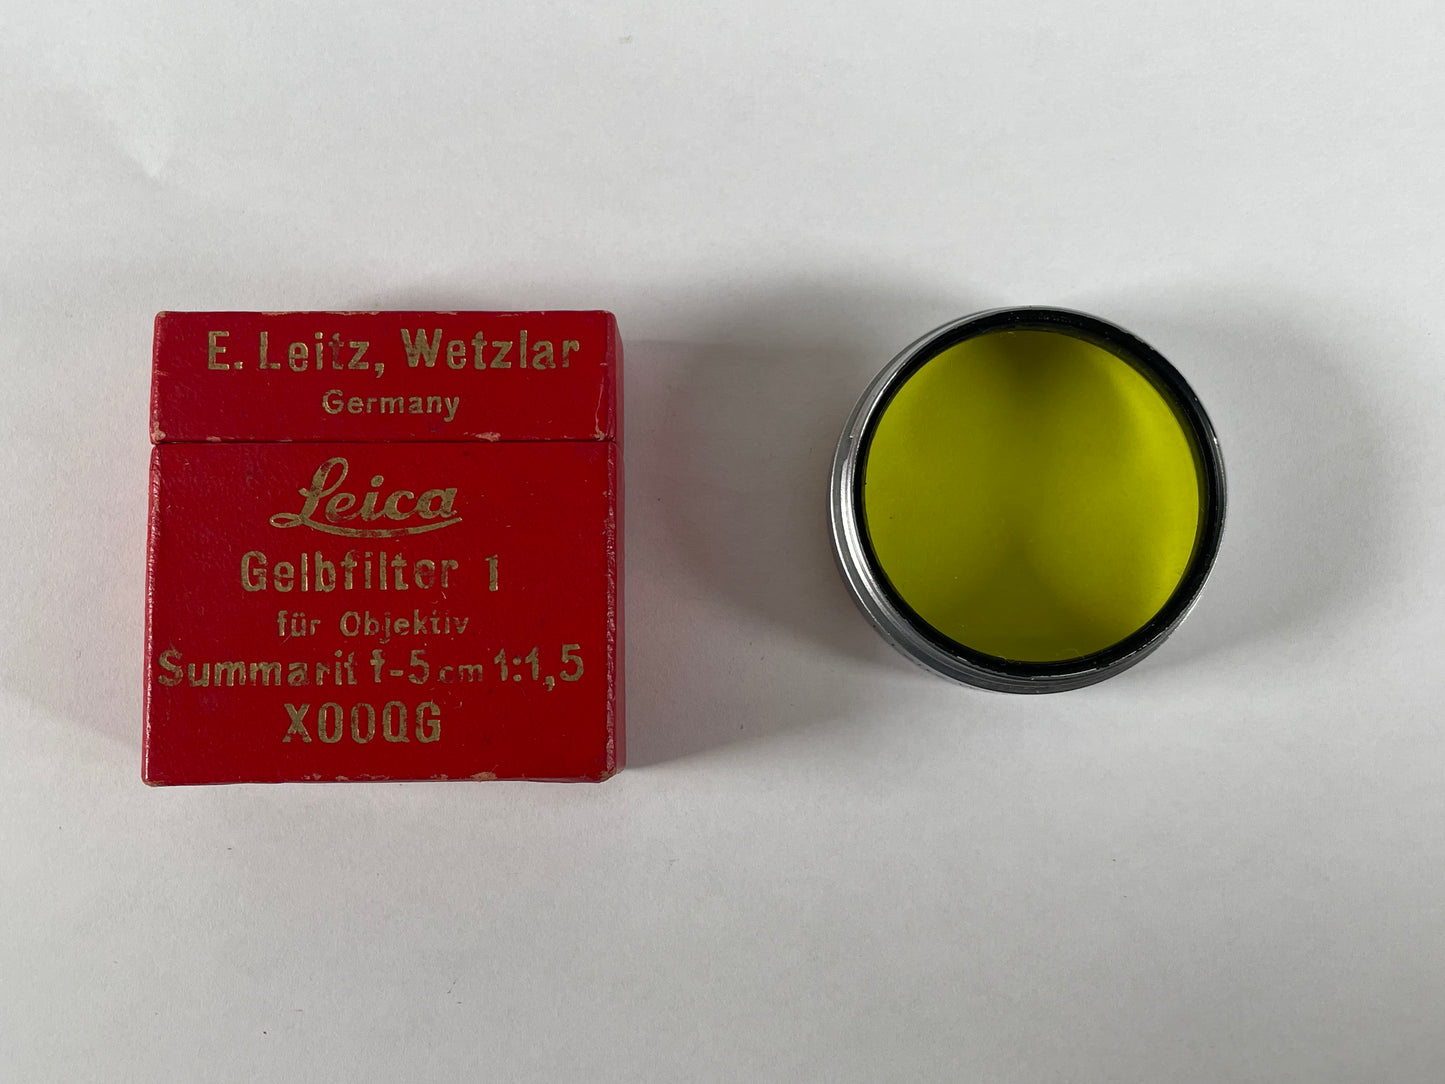 Leica Bayonet 1 Yellow Chrome Lens Filter for Summarit XOOQG